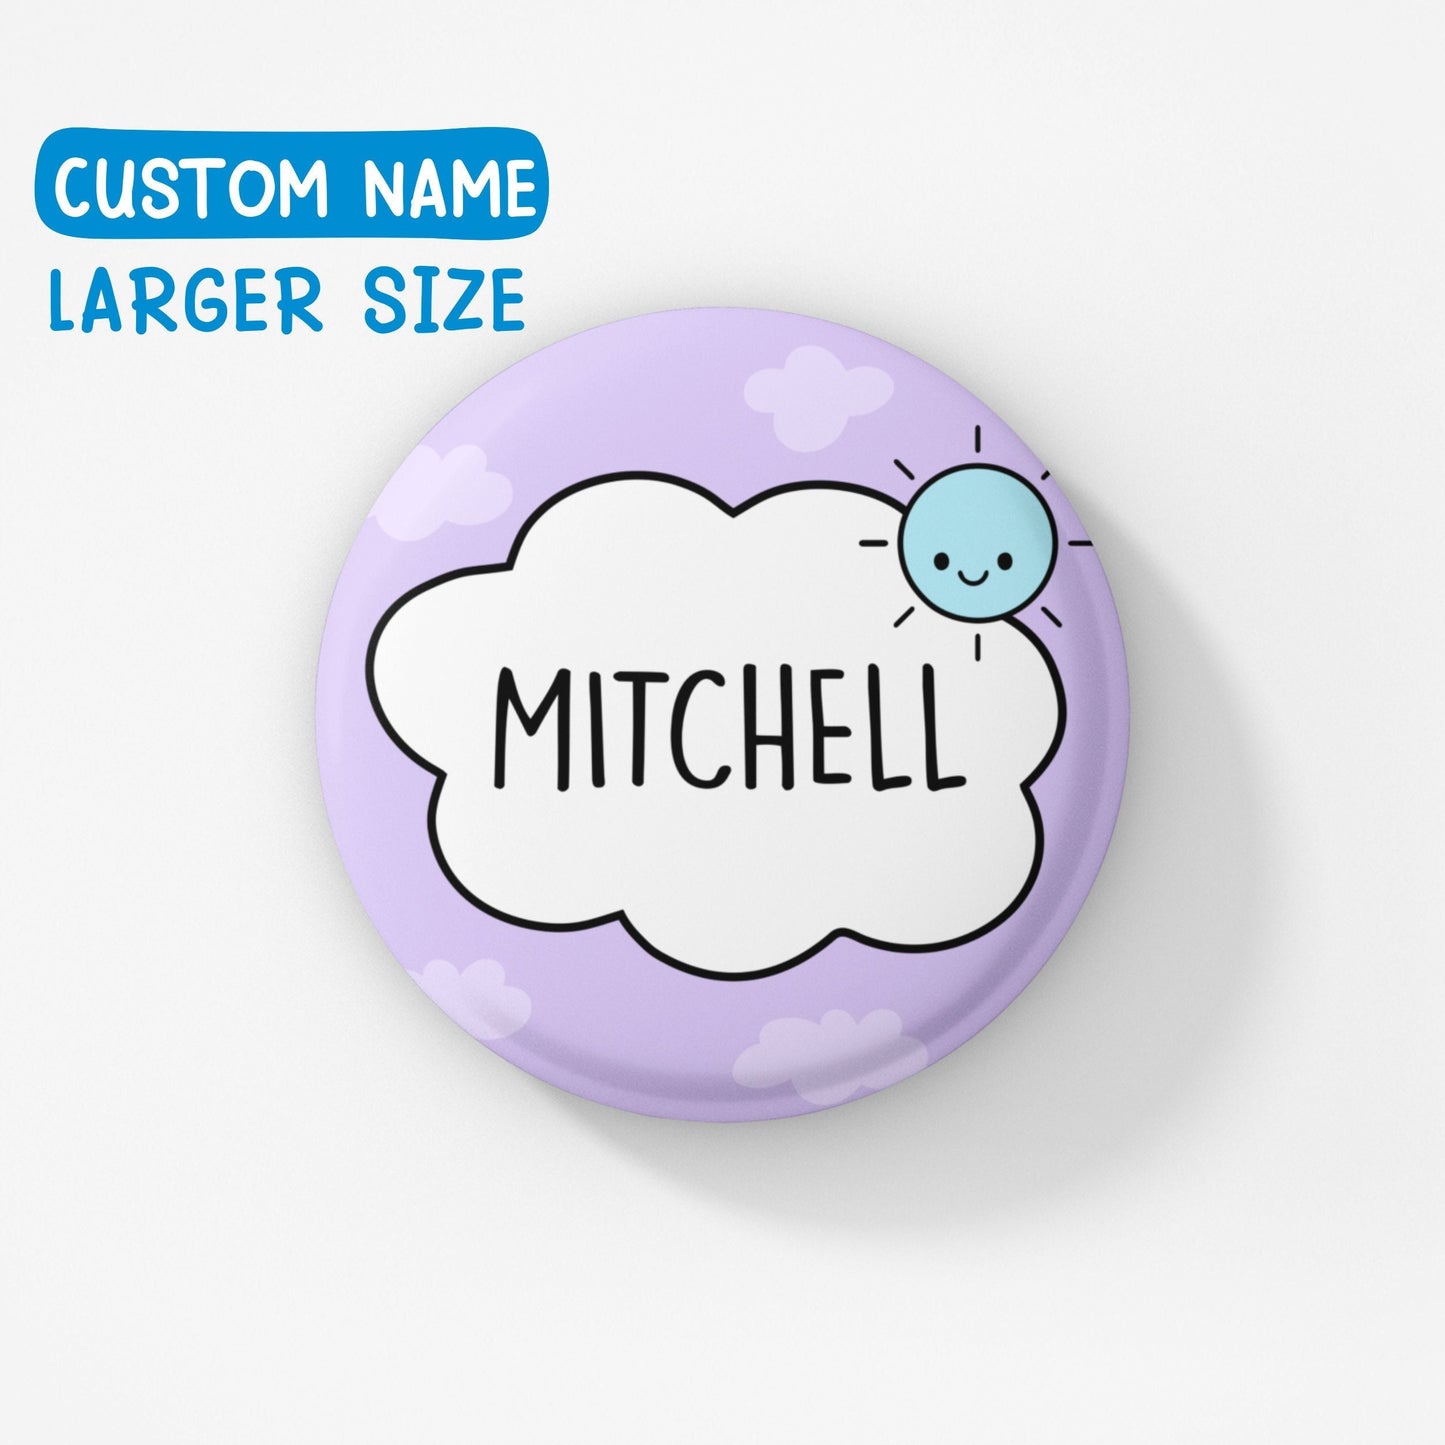 LARGE Custom Name + Wording Badge Pin | Personalised Gift - Custom Gift - Customised Name